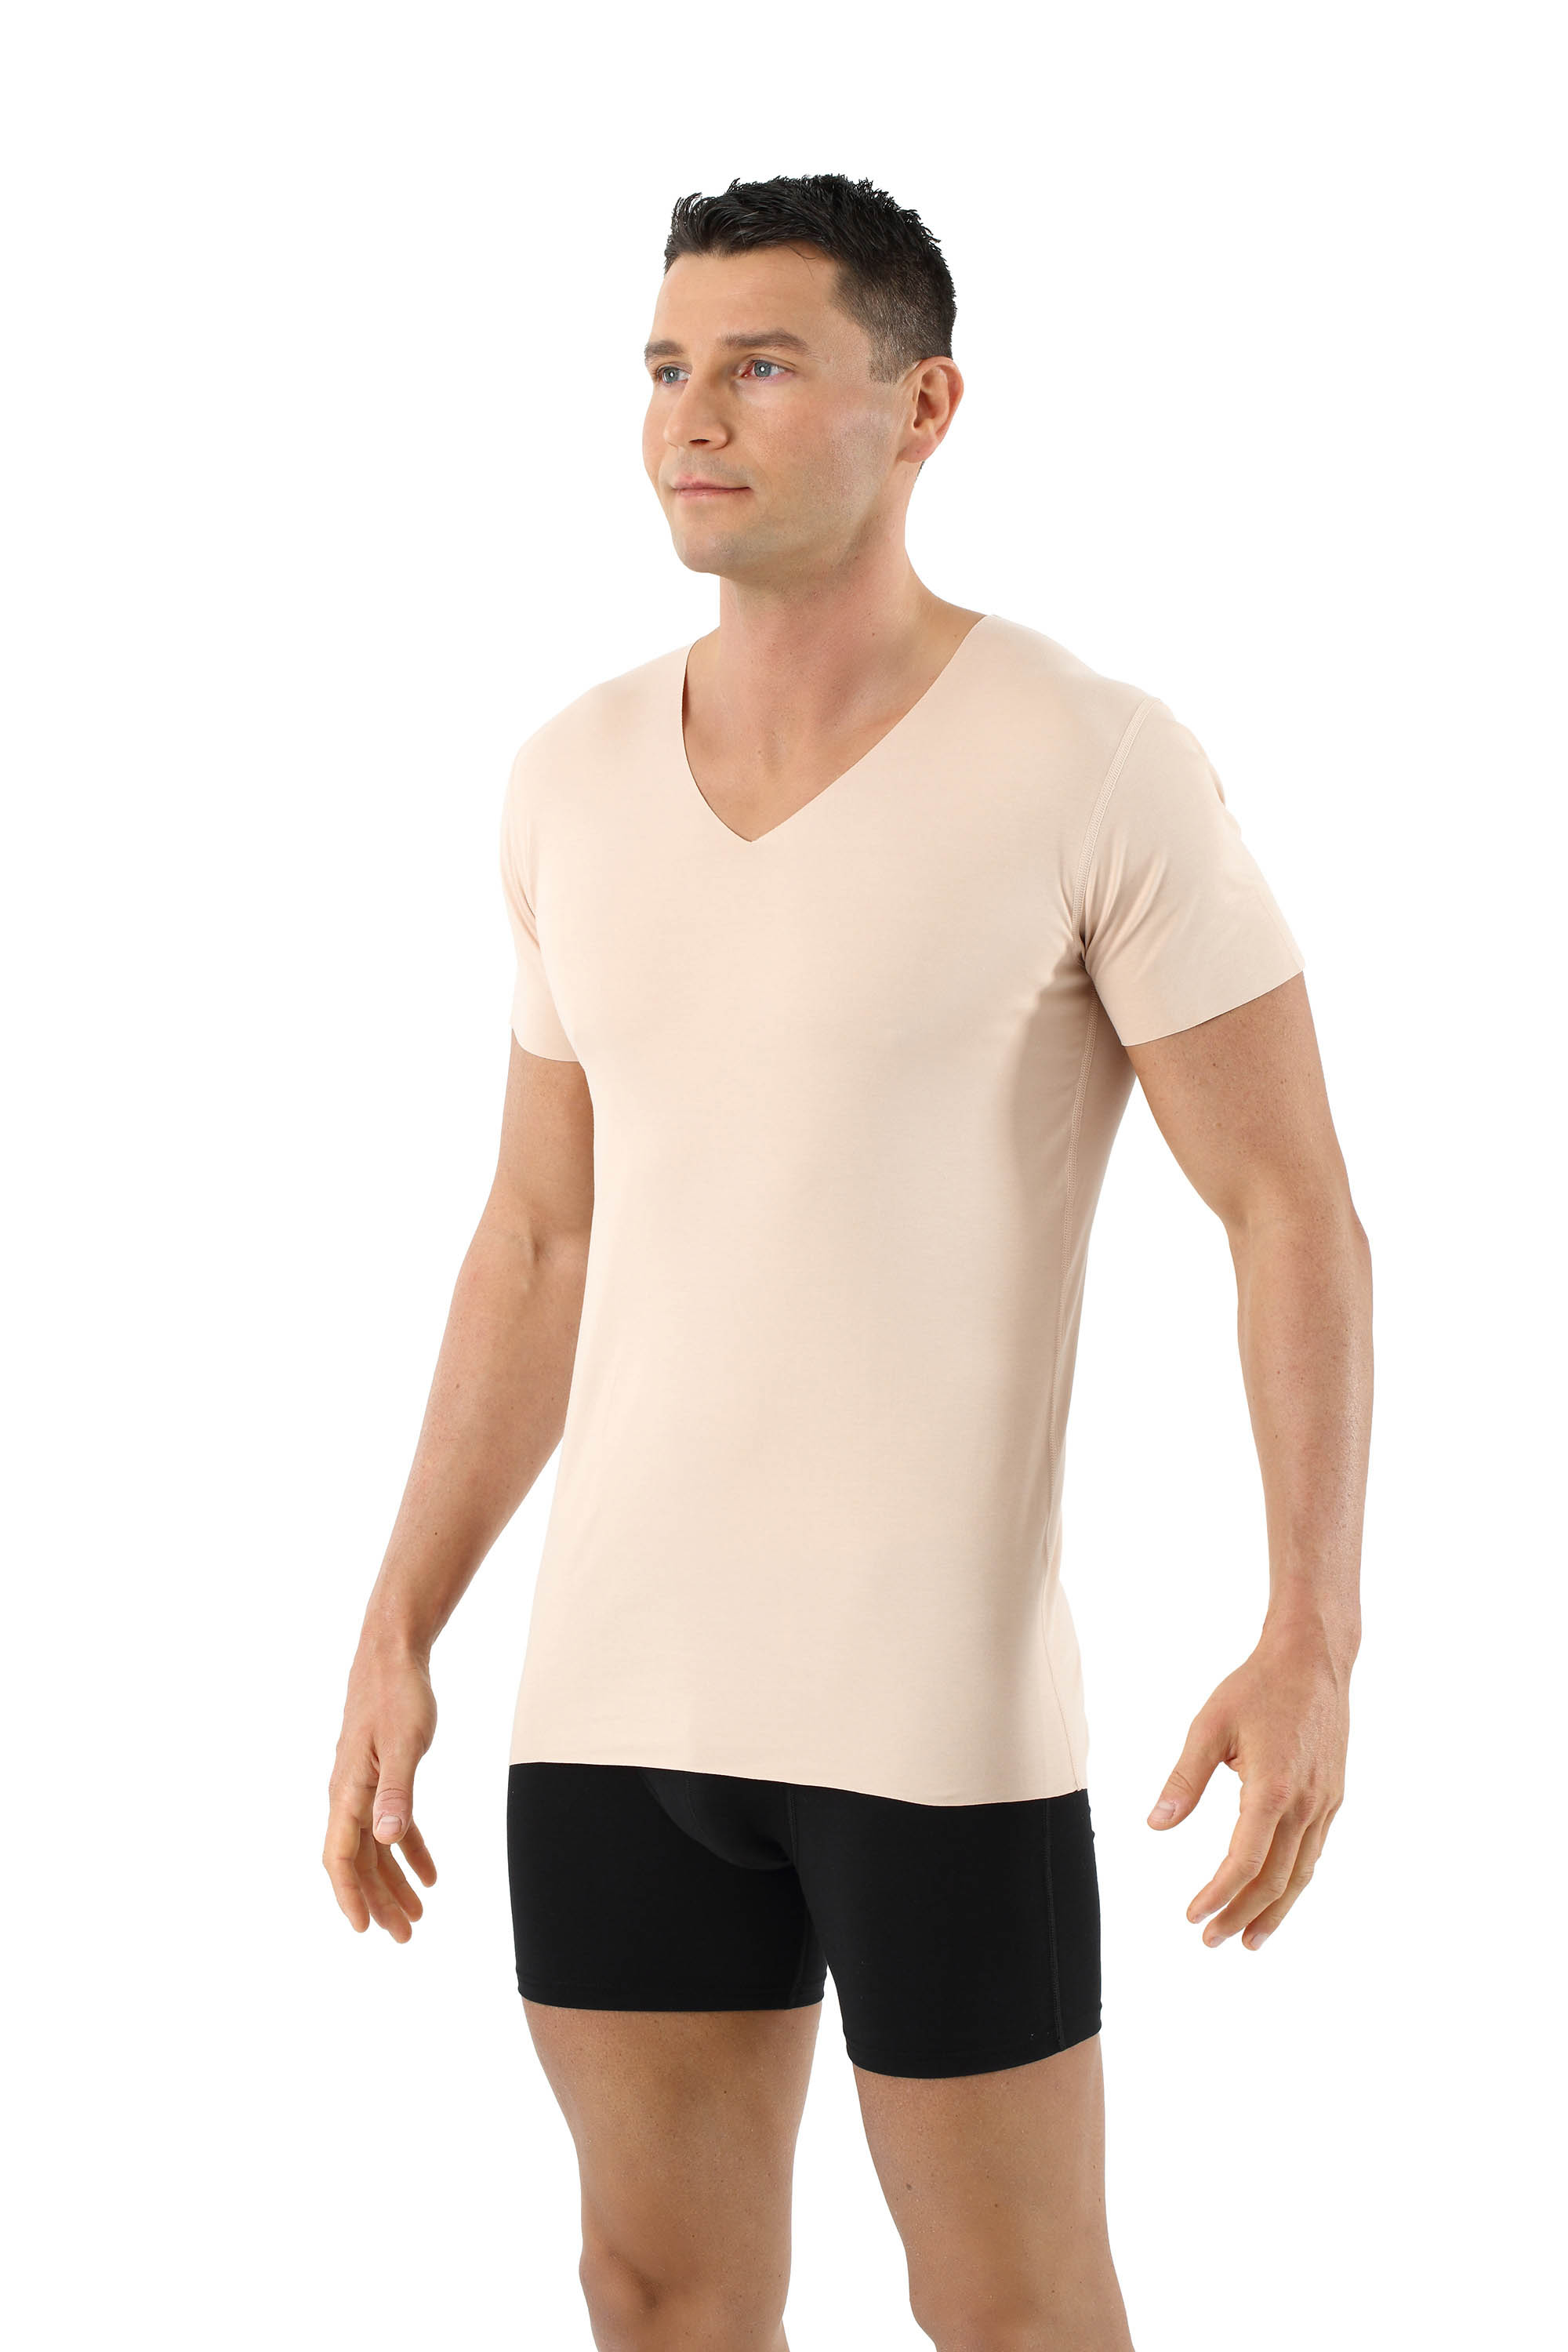 ALBERT KREUZ  Laser cut seamless v-neck undershirt sleeveless stretch  cotton white